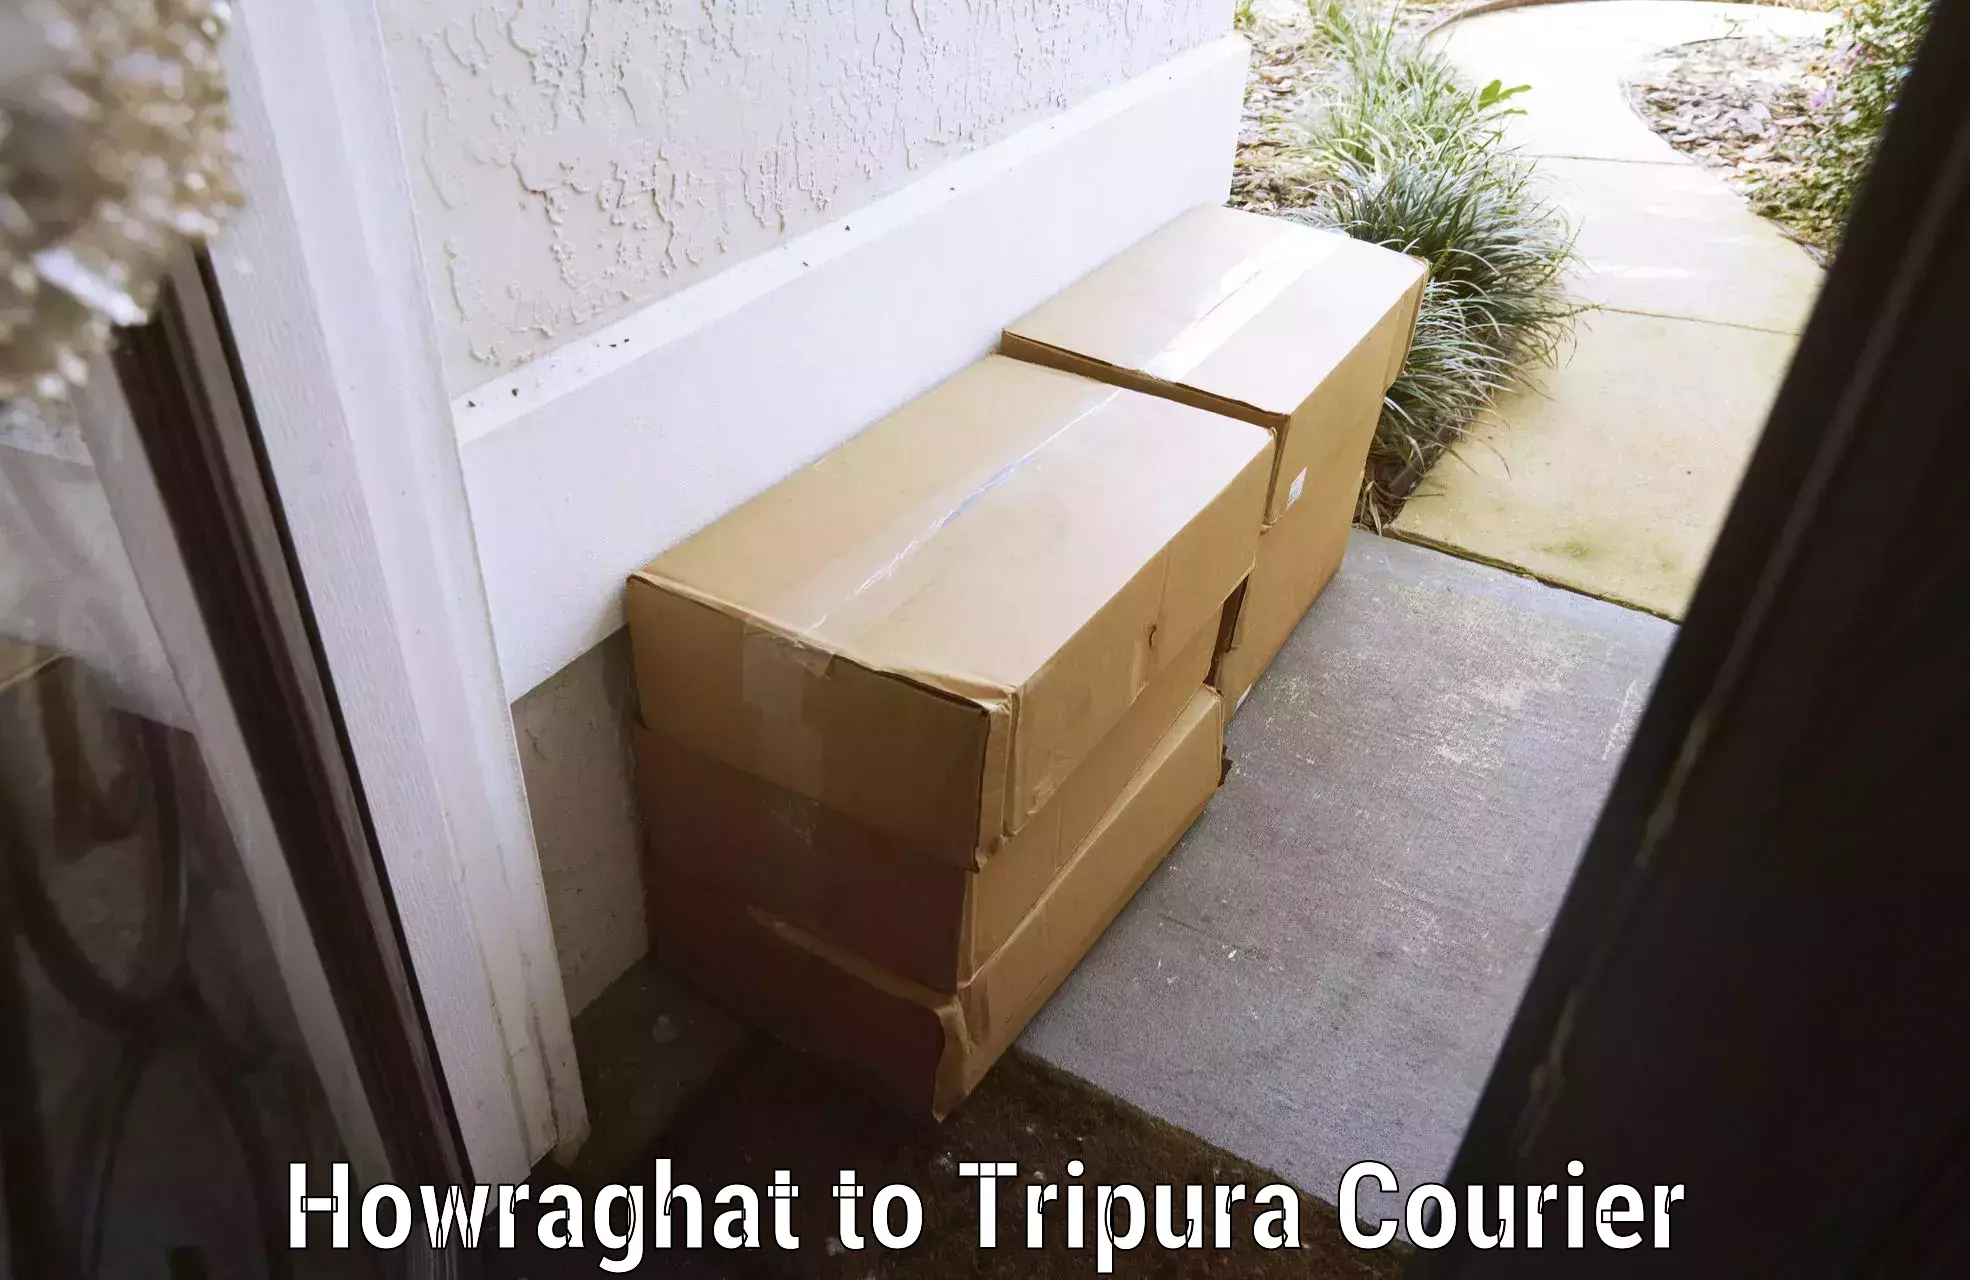 Urgent luggage shipment Howraghat to West Tripura